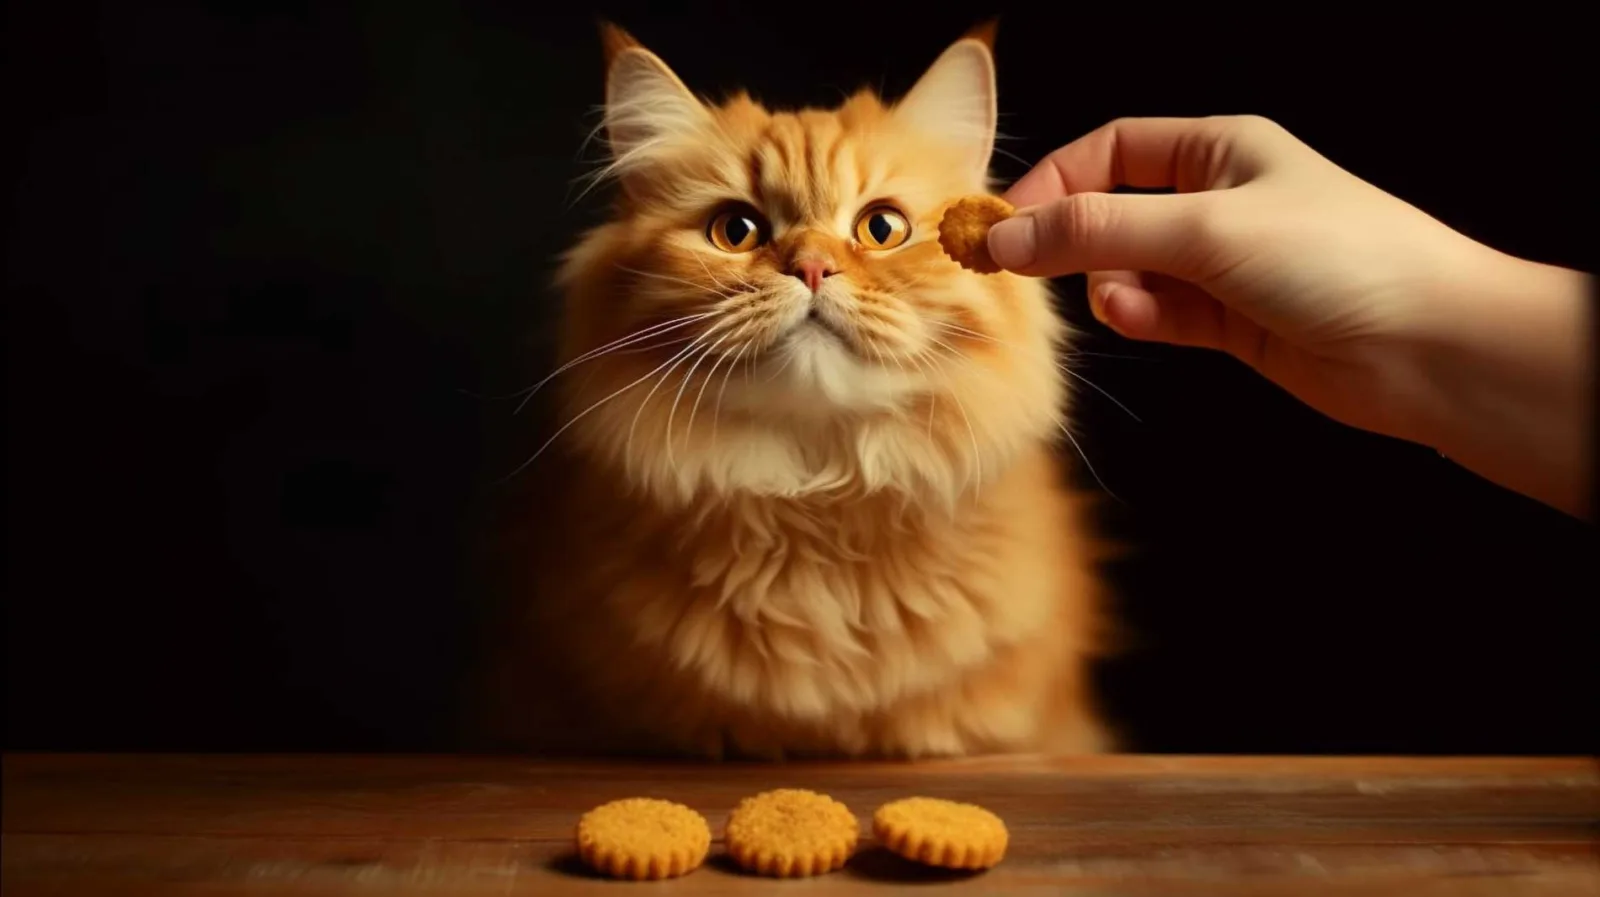 Rewarding a cat with treats